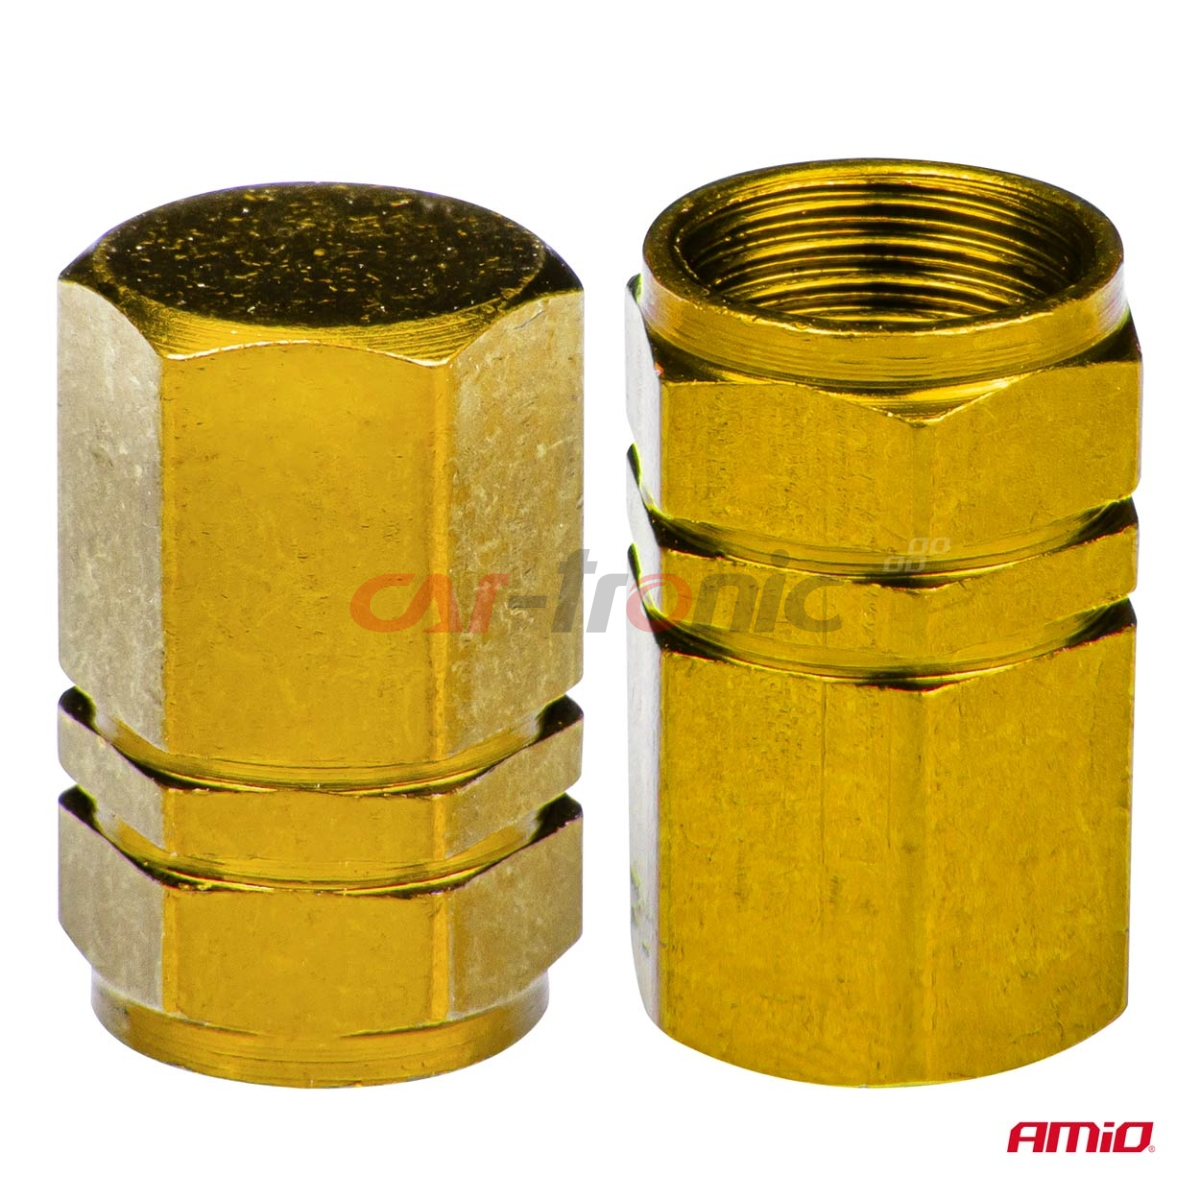 Aluminiowe nakrętki na wentyle kapturki żółte 4 szt AMIO-03633